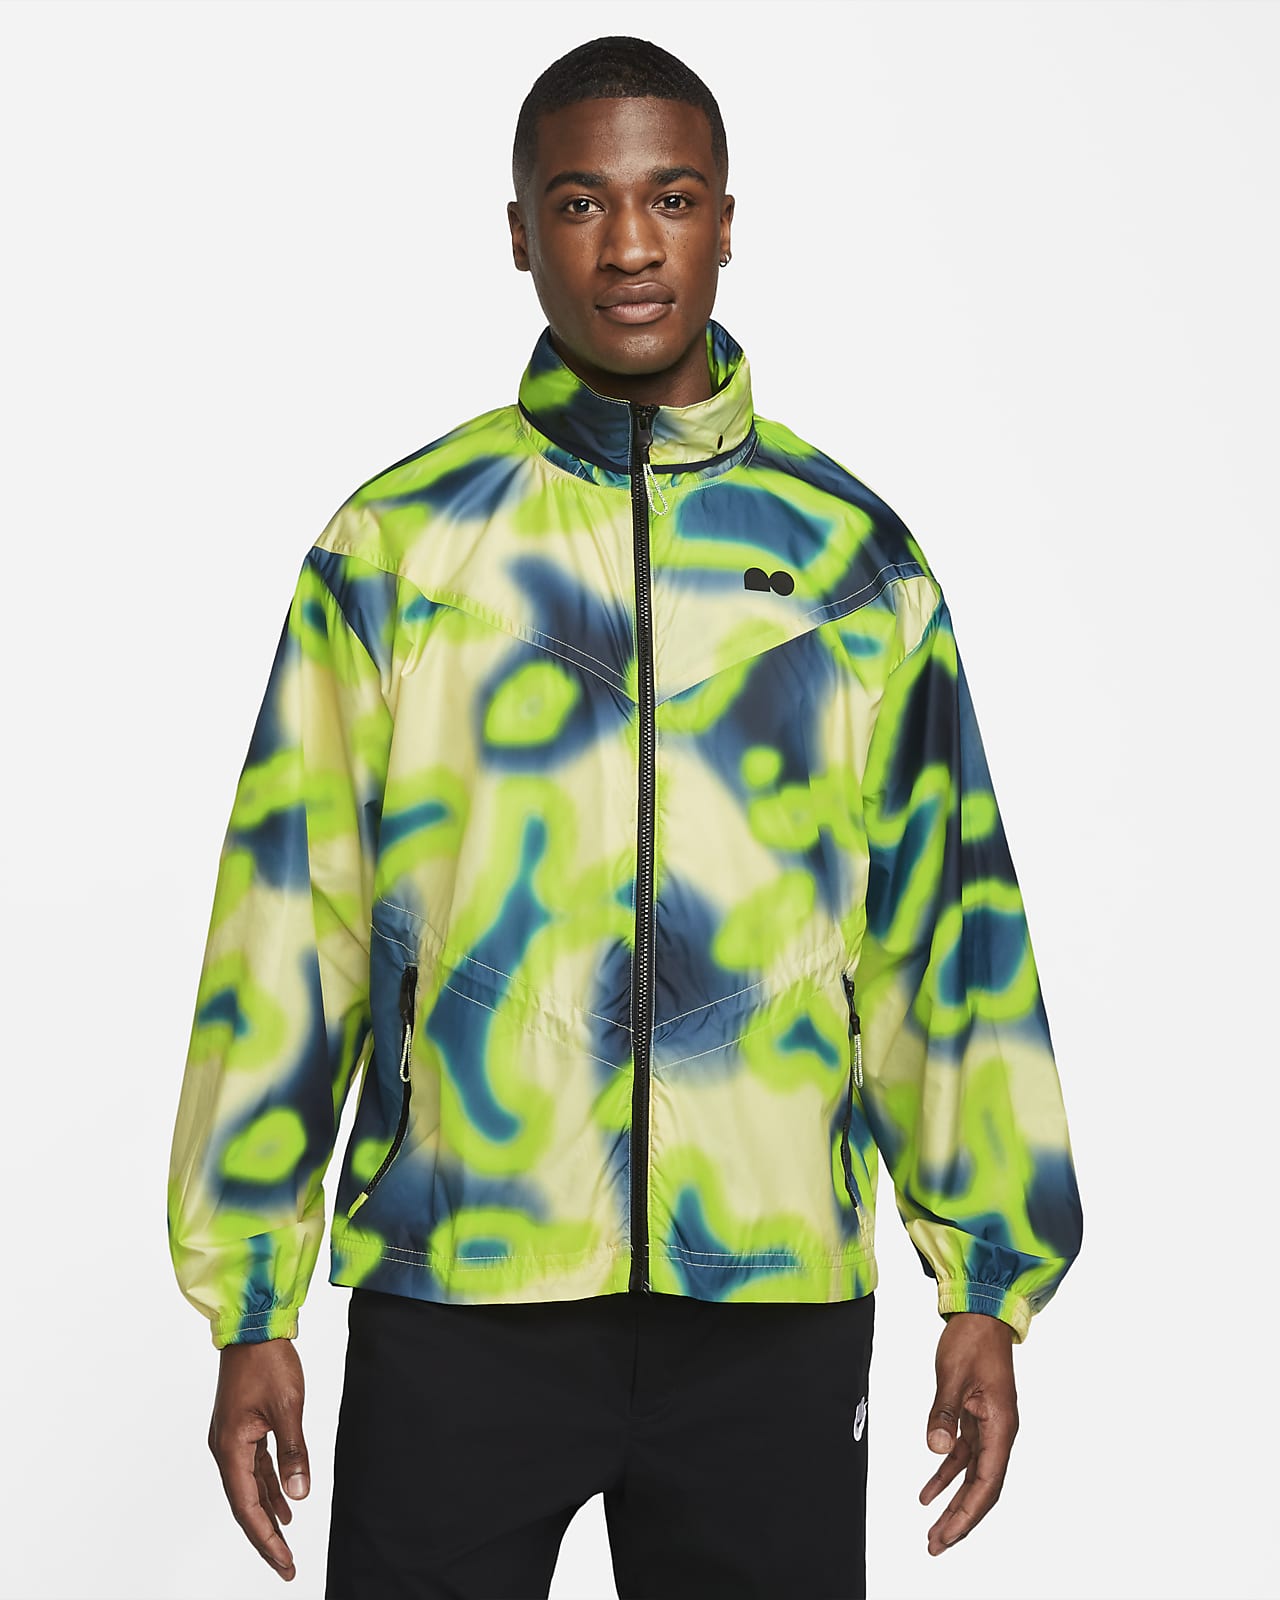 NikeCourt Naomi Osaka Collection Packable Print Jacket